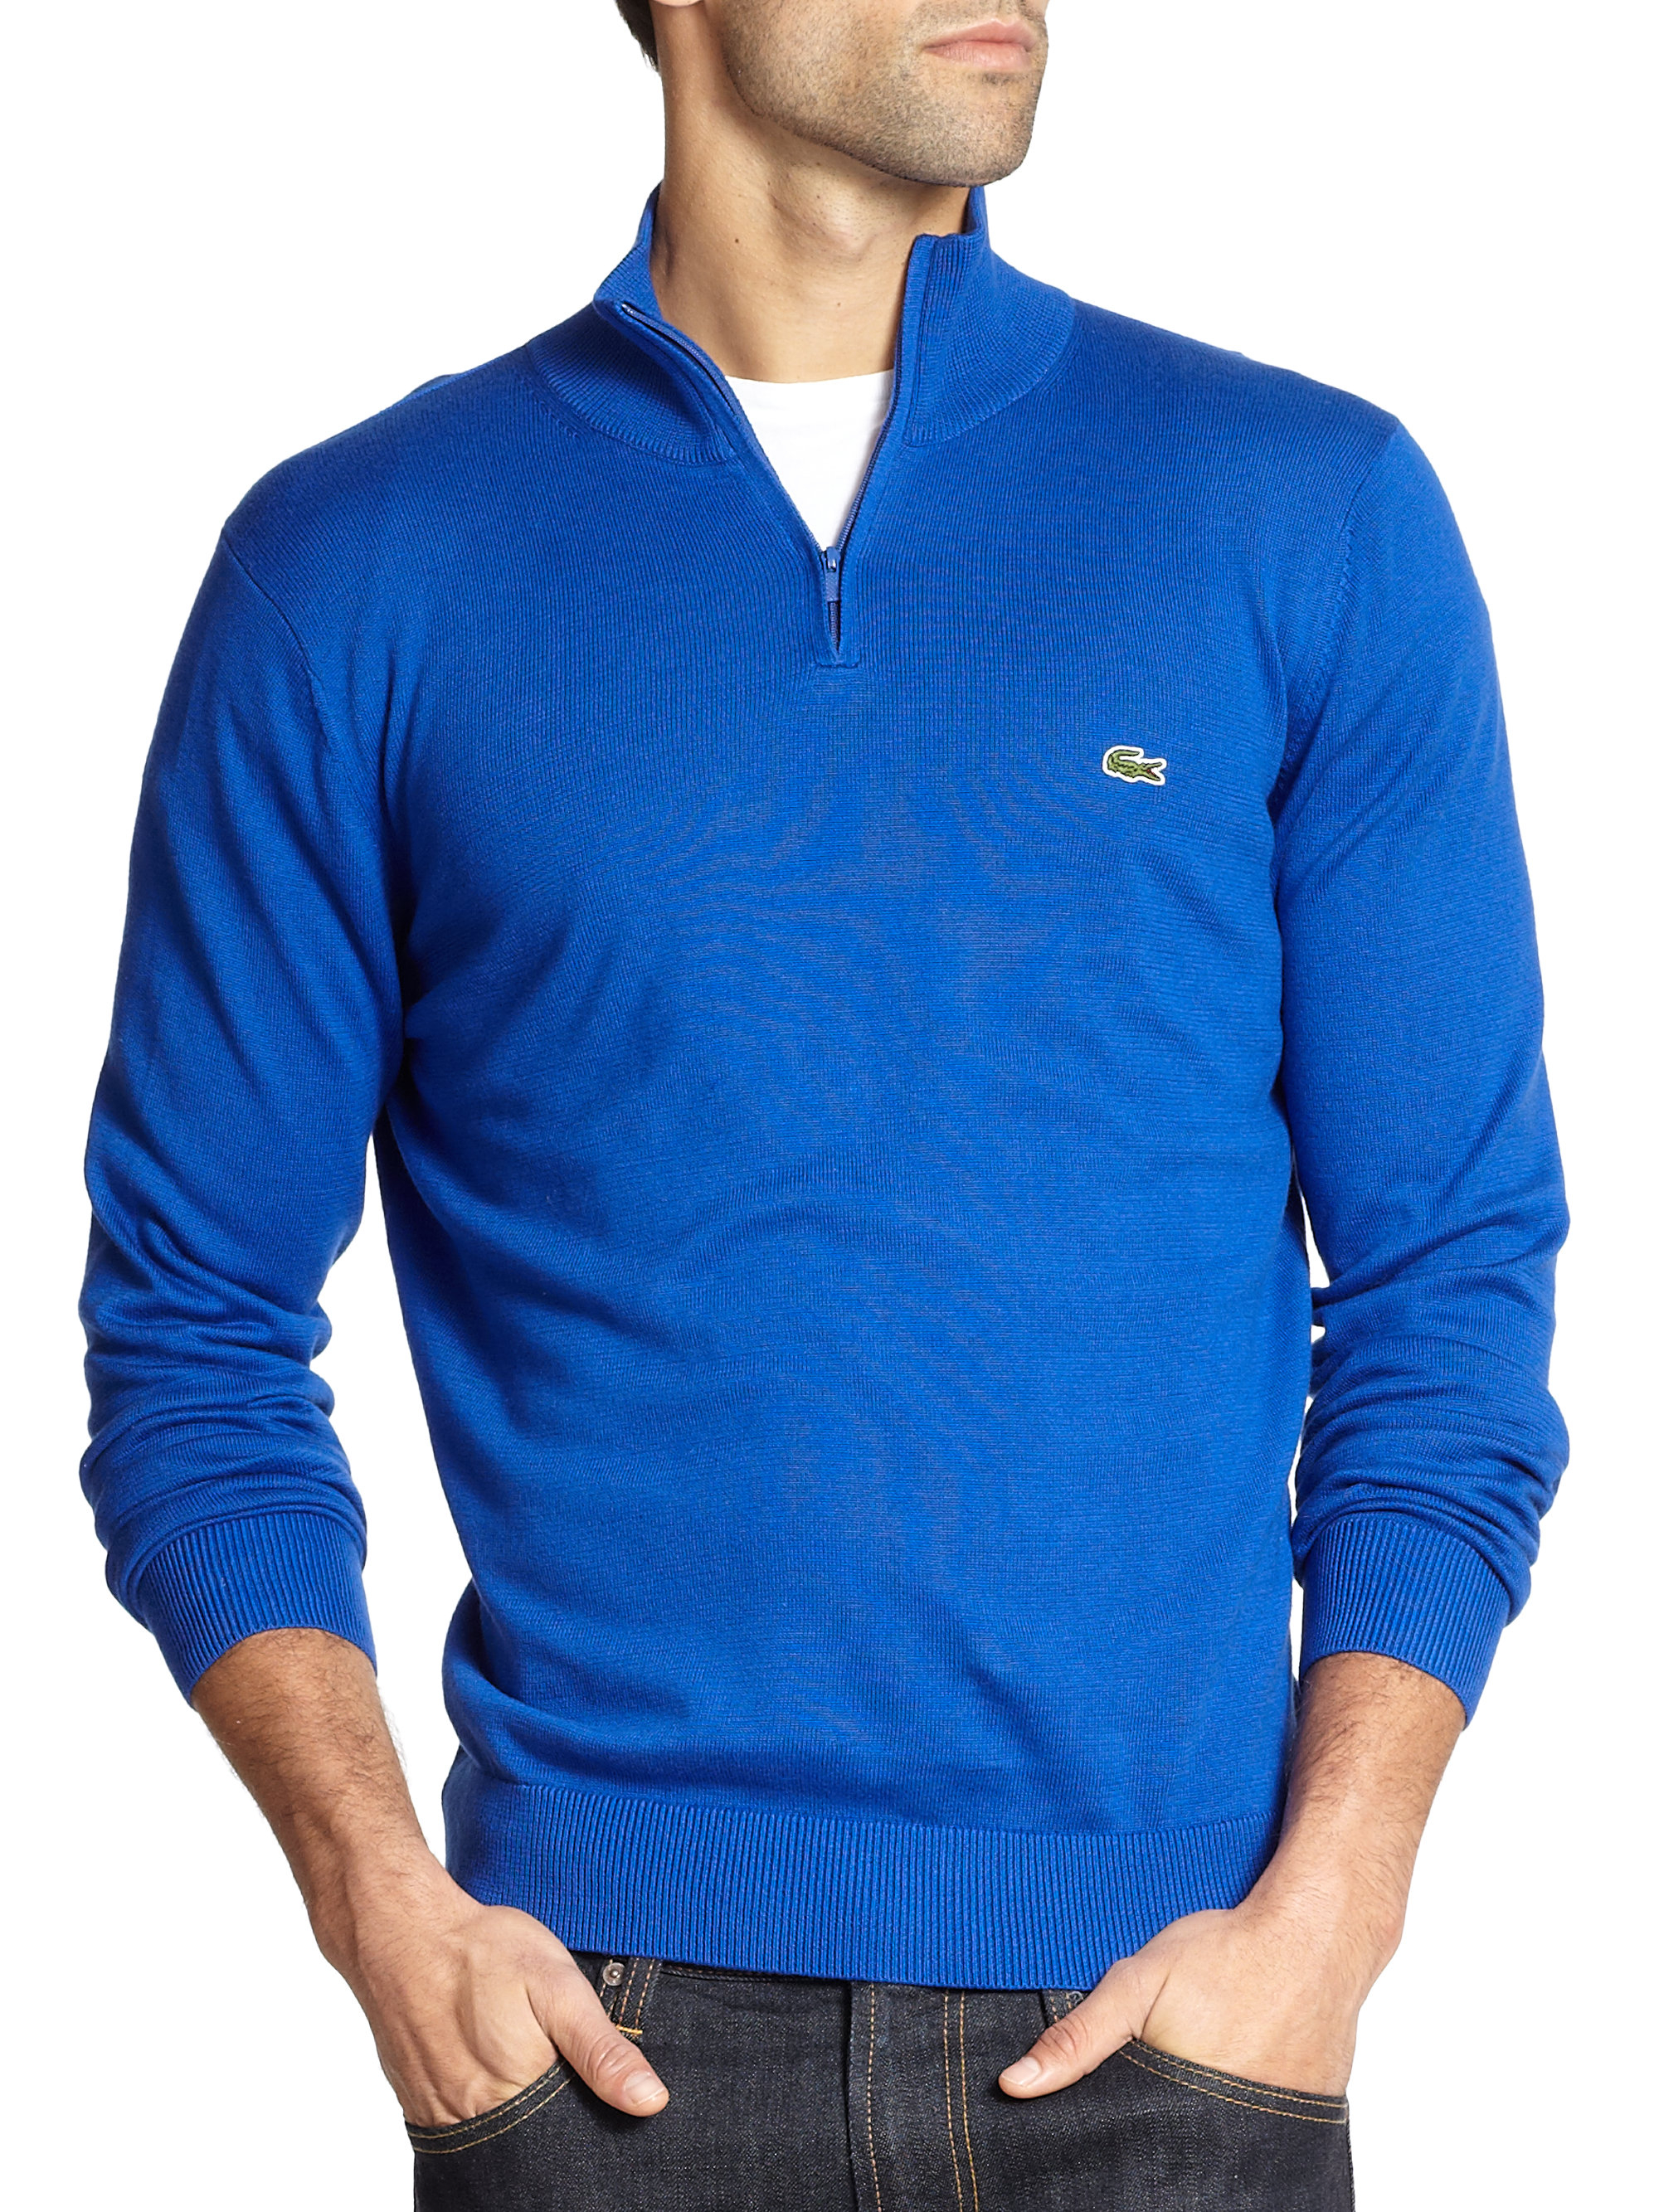 Lyst - Lacoste Half-zip Pullover Sweater in Blue for Men